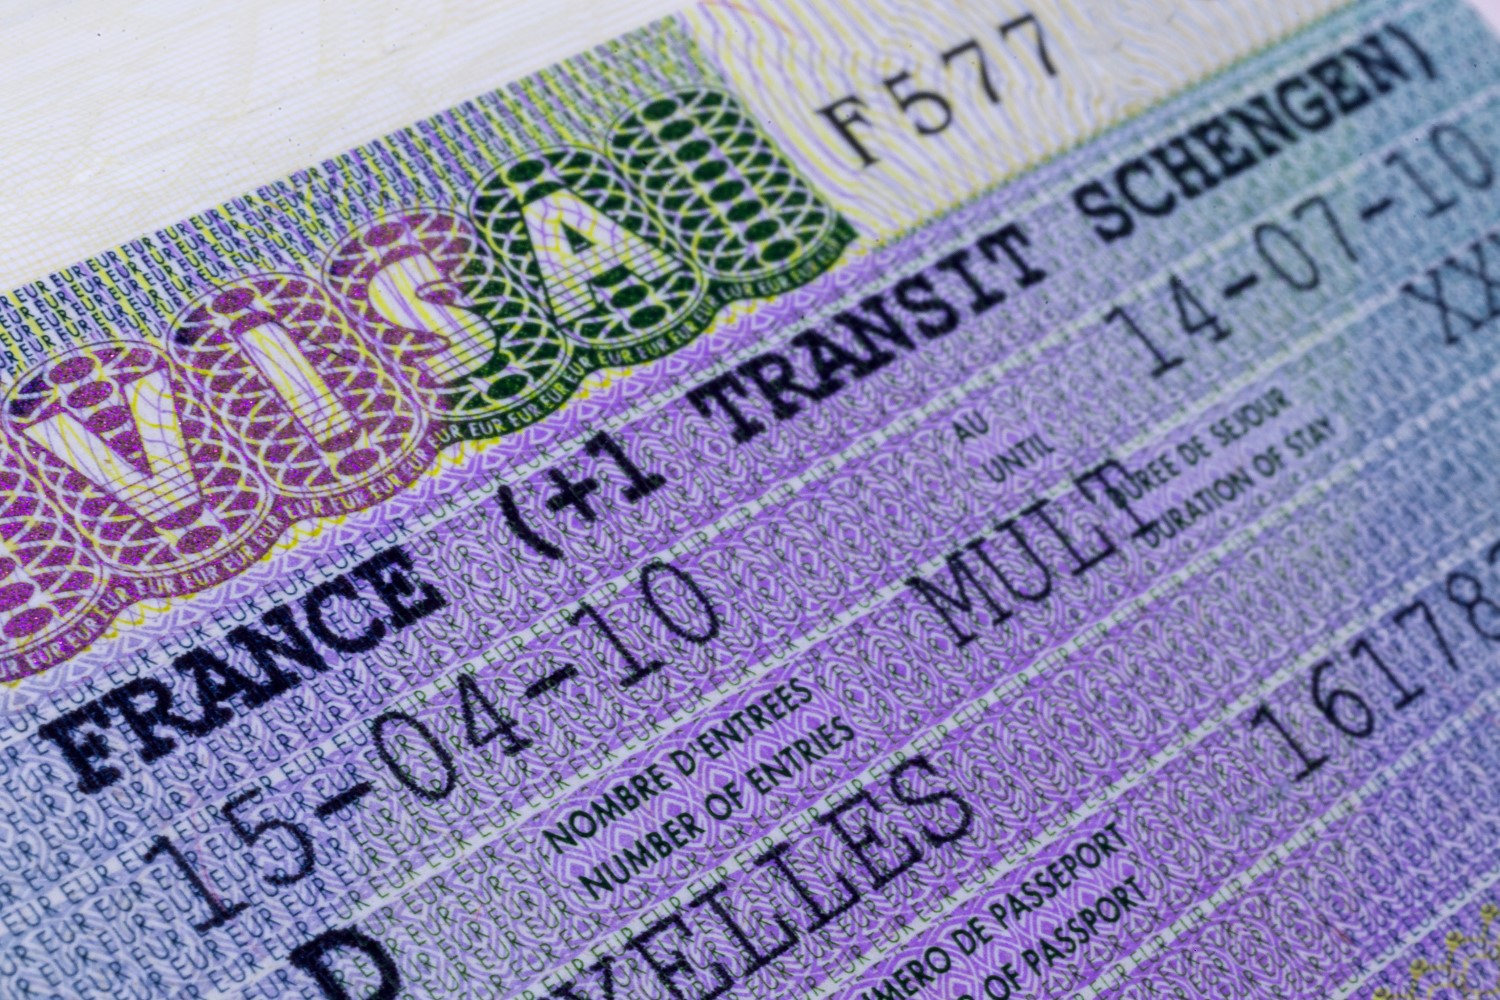 French Financial Watchdog Approves First ICO Under New ‘Visa’ Scheme